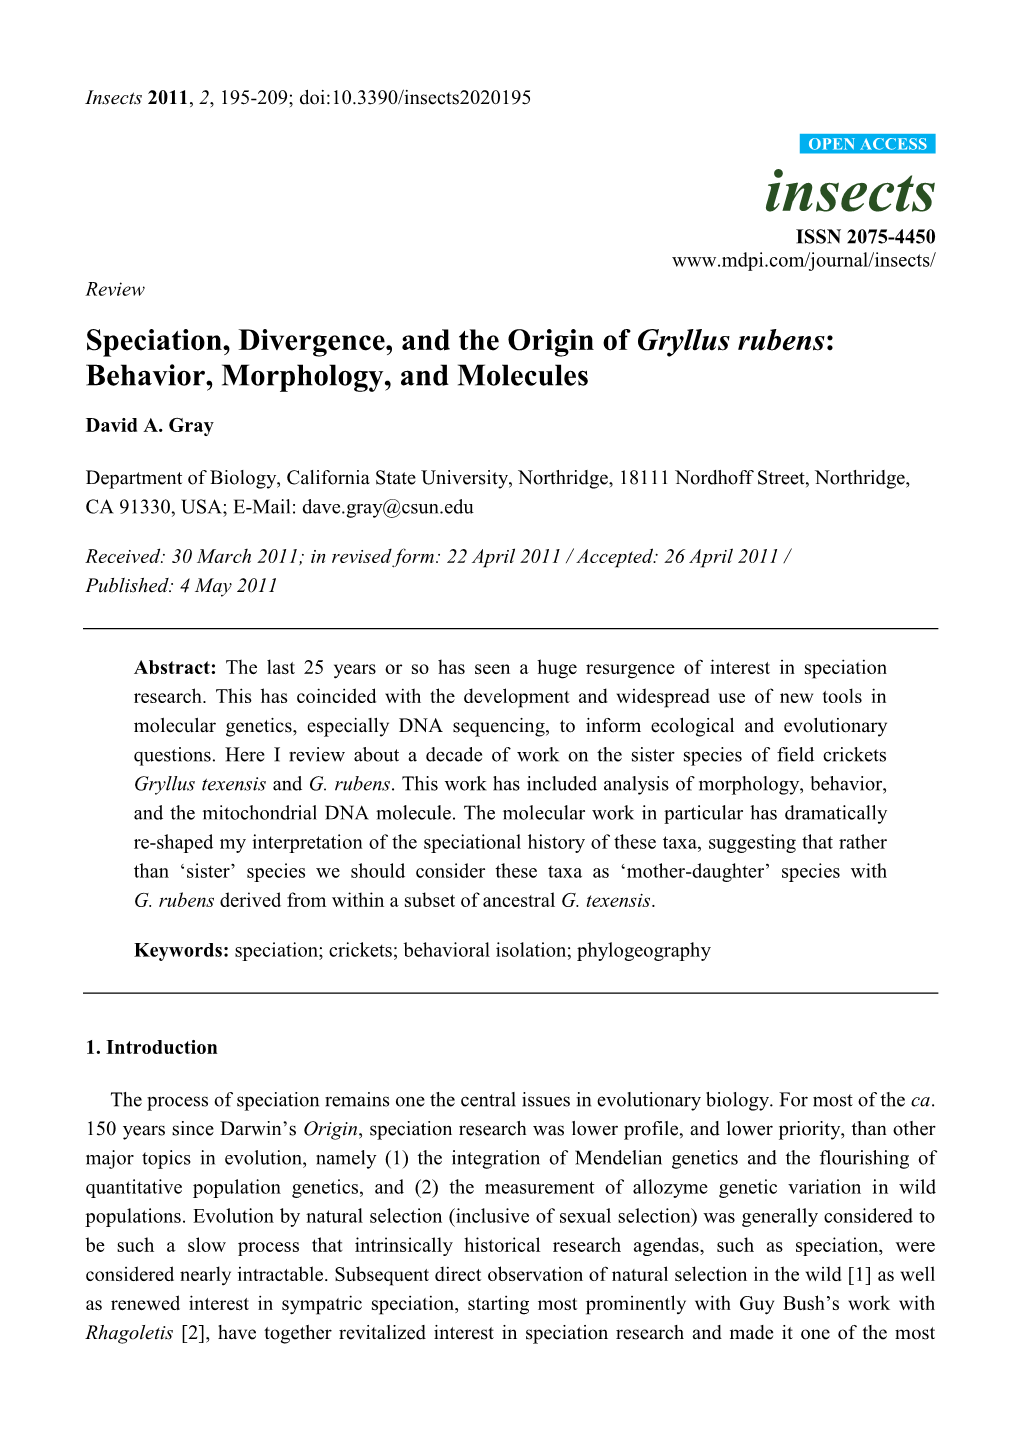 Of Gryllus Rubens: Behavior, Morphology, and Molecules